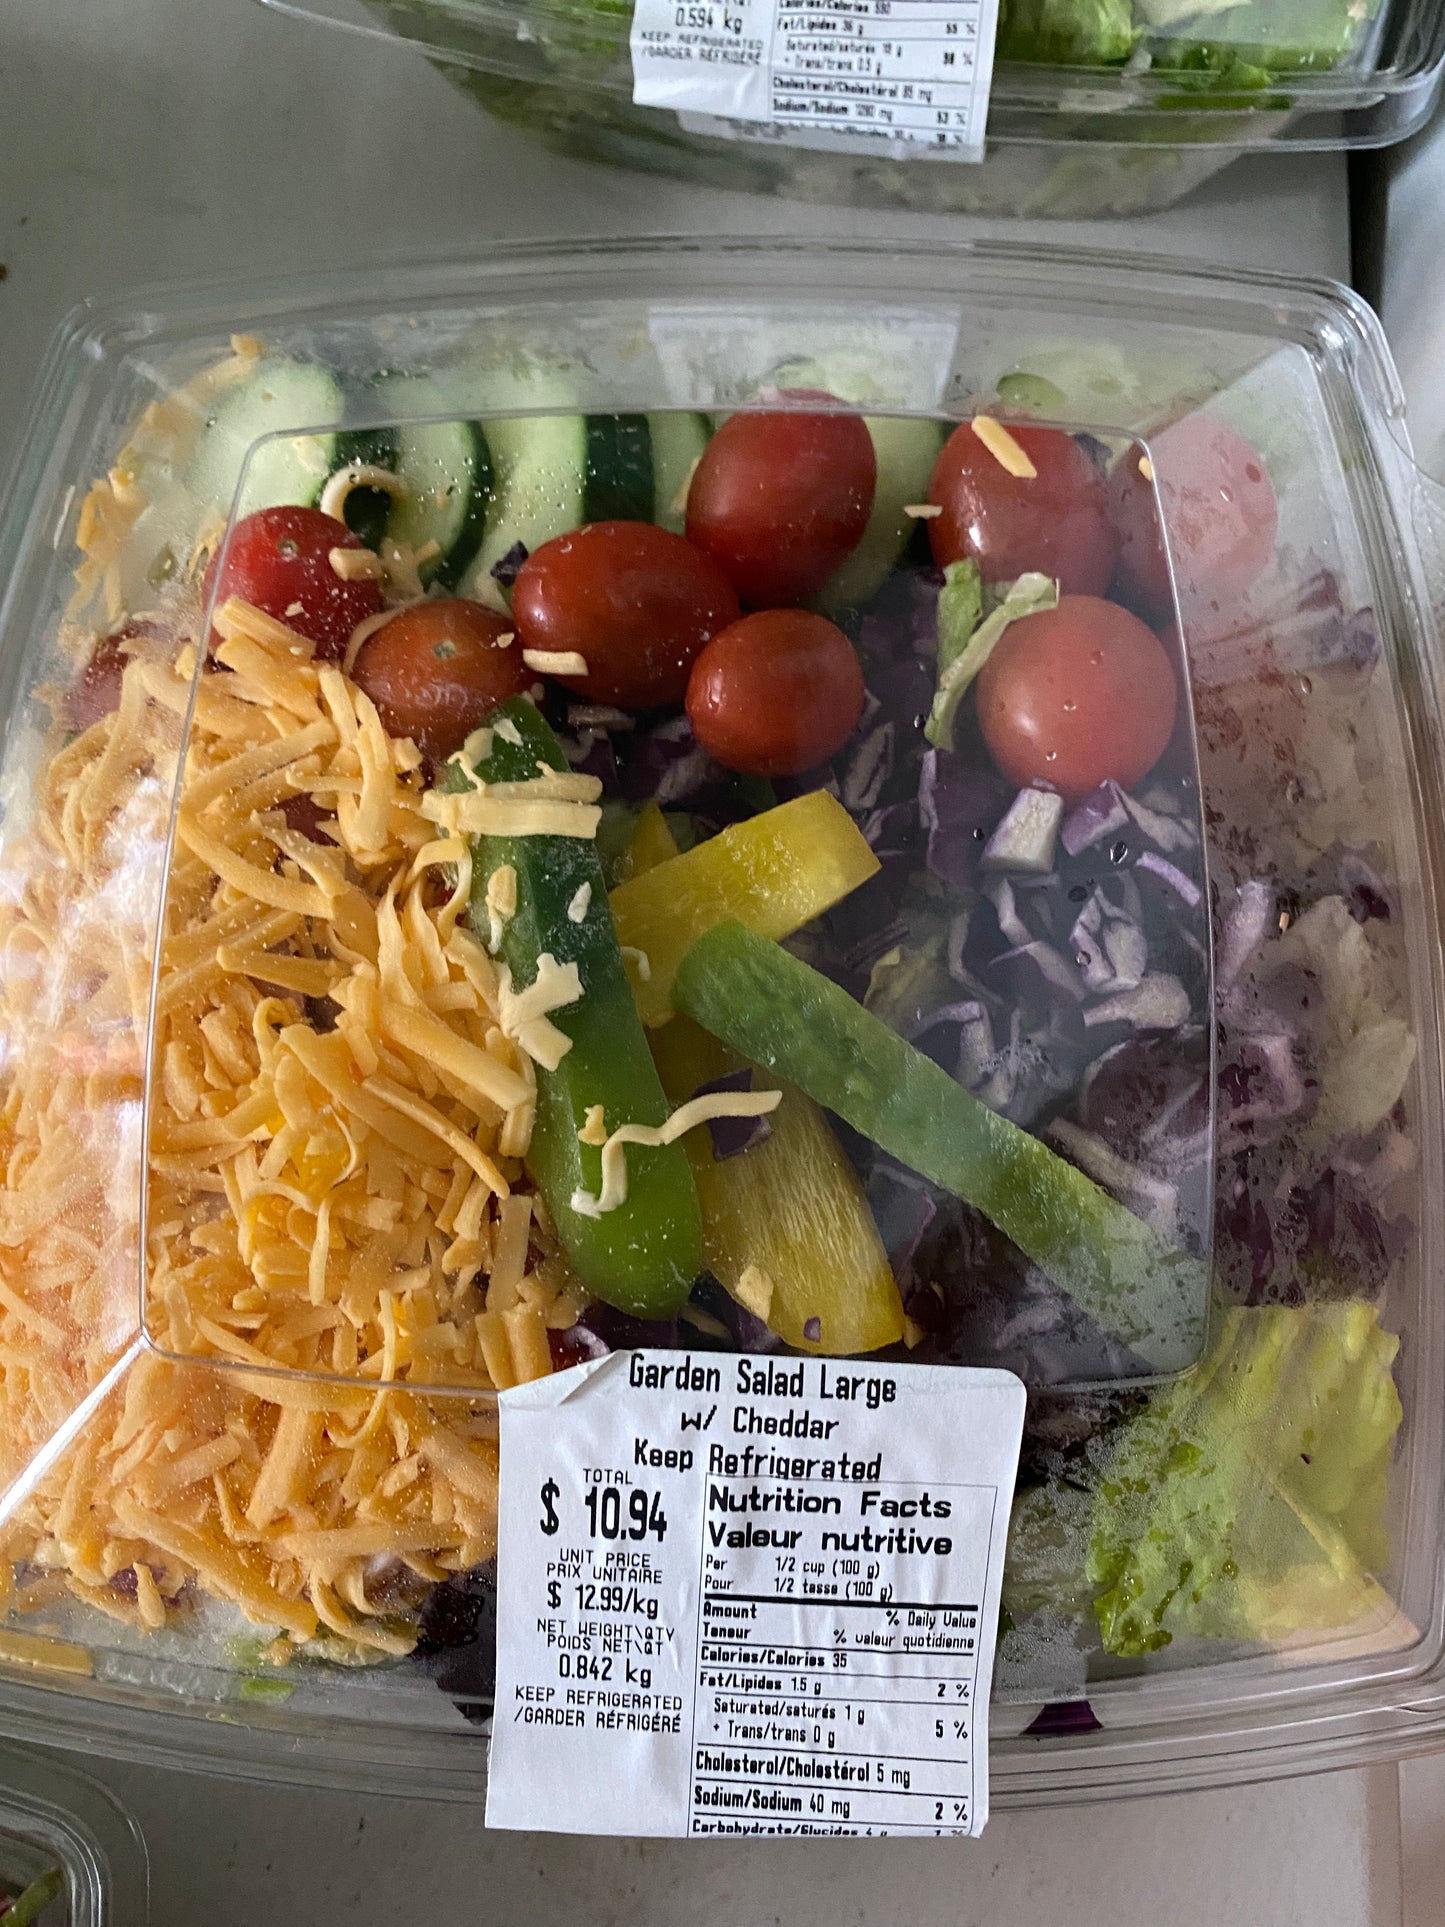 Salad - Large